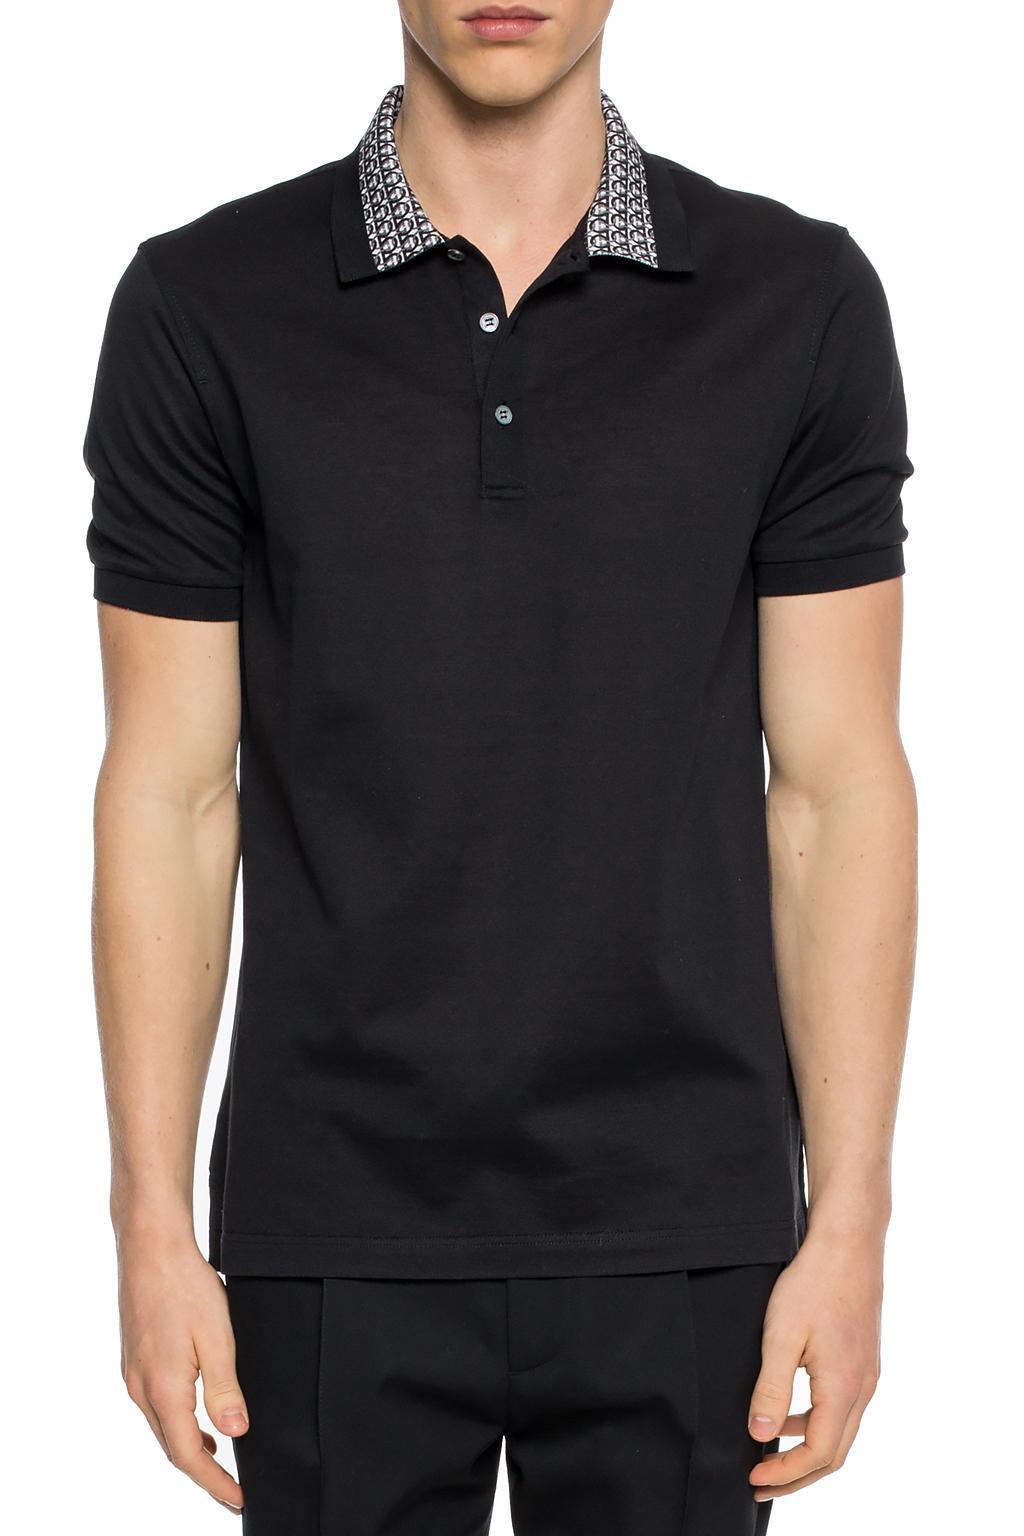 Lyst - Ferragamo Polo Shirt With Decorative Collar in Black for Men